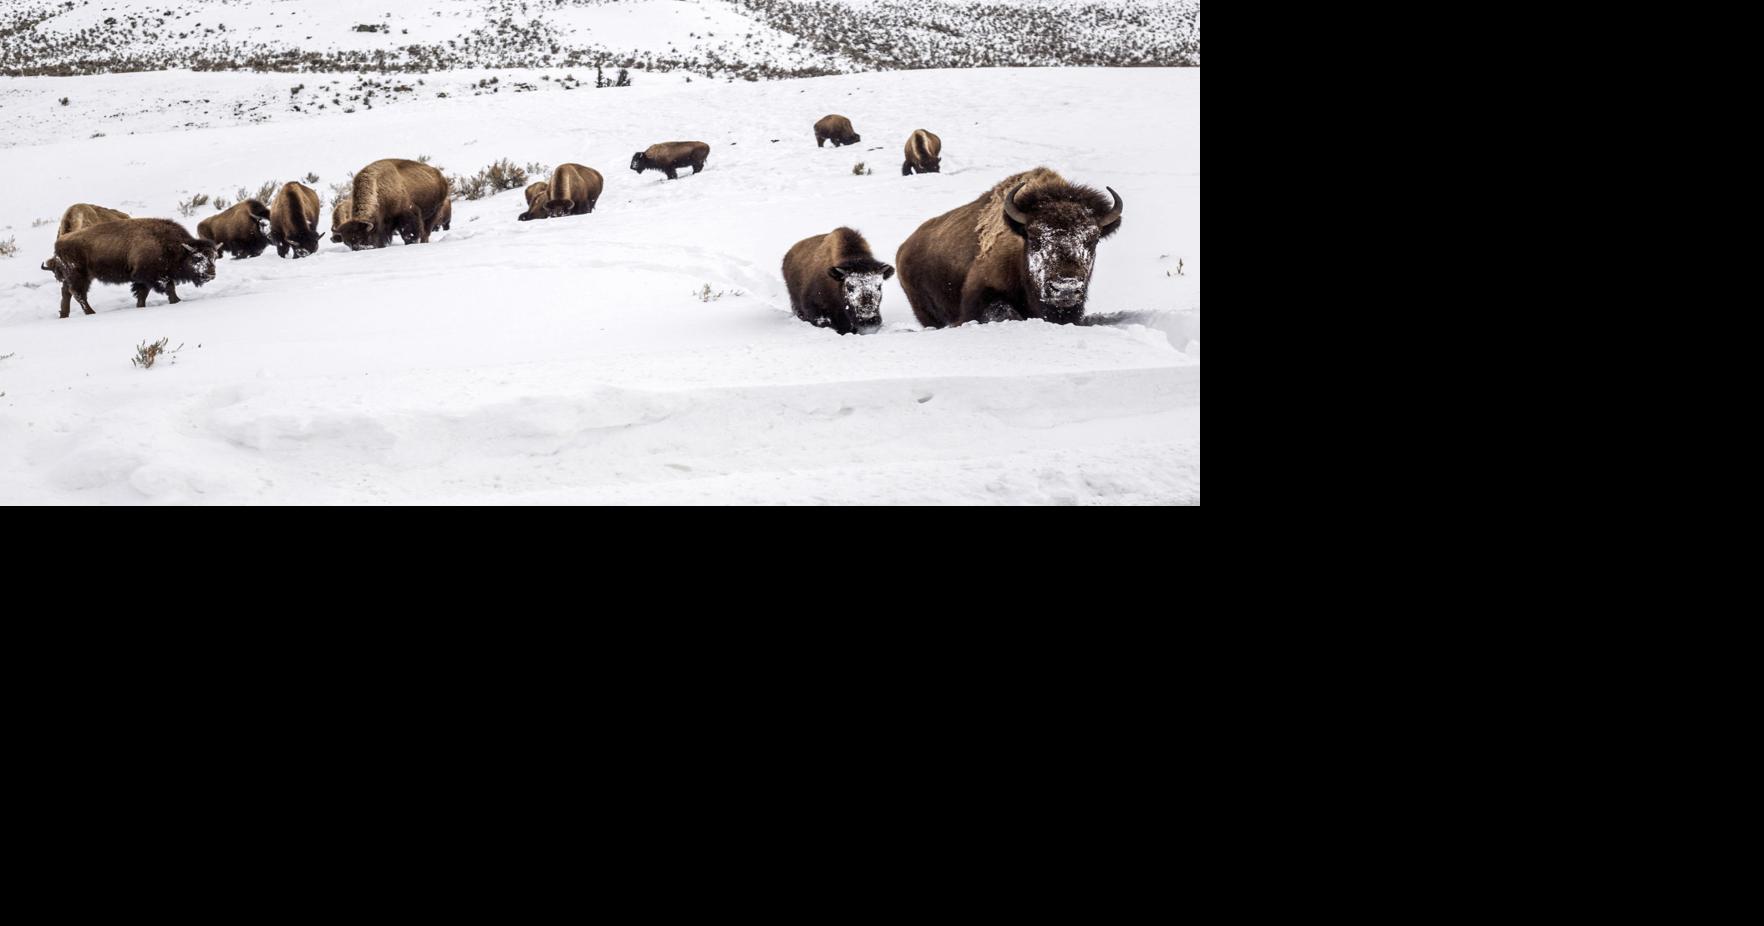 Snowfall, Wildlife and Gardens - The National Wildlife Federation Blog